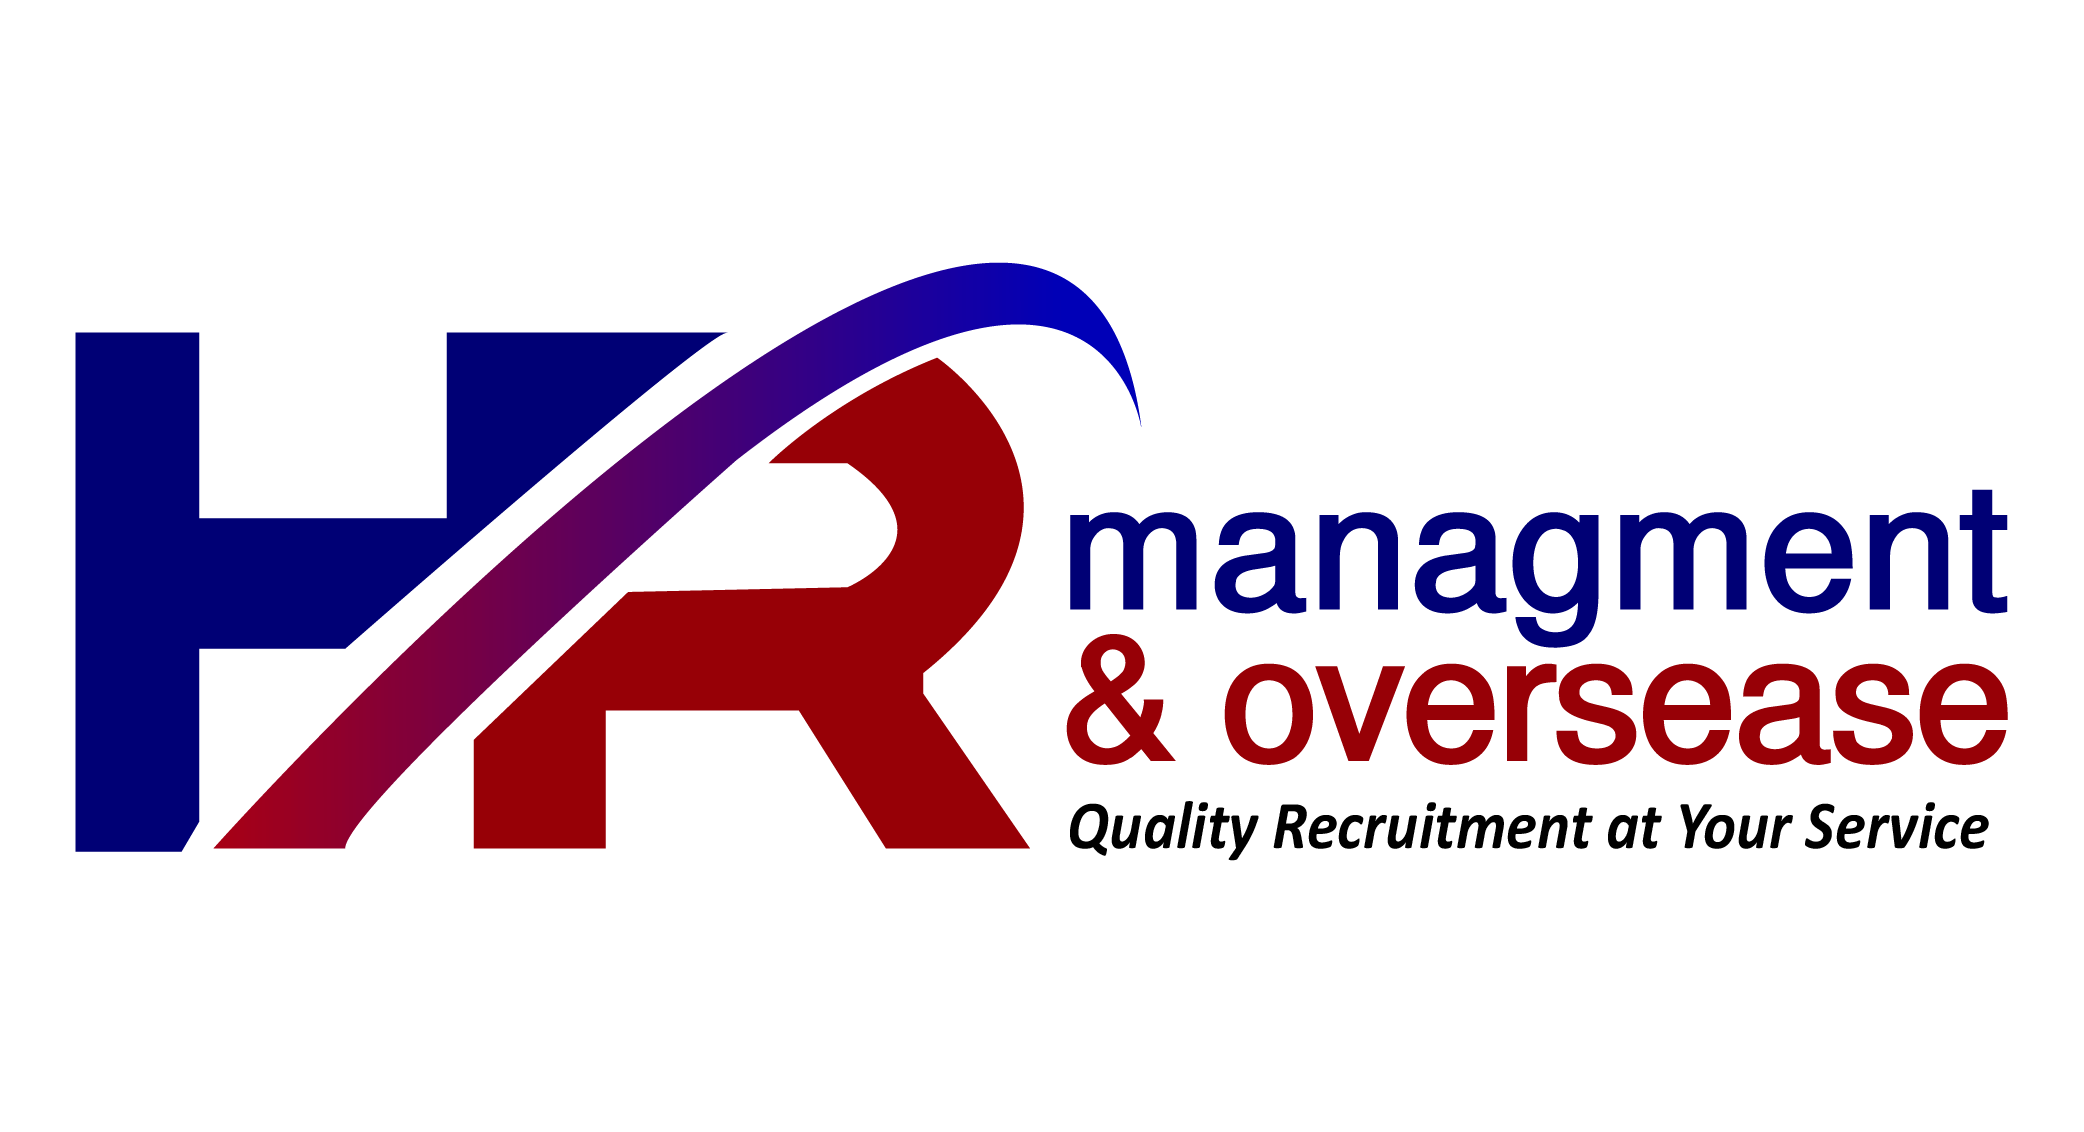 HR Management & Overseas